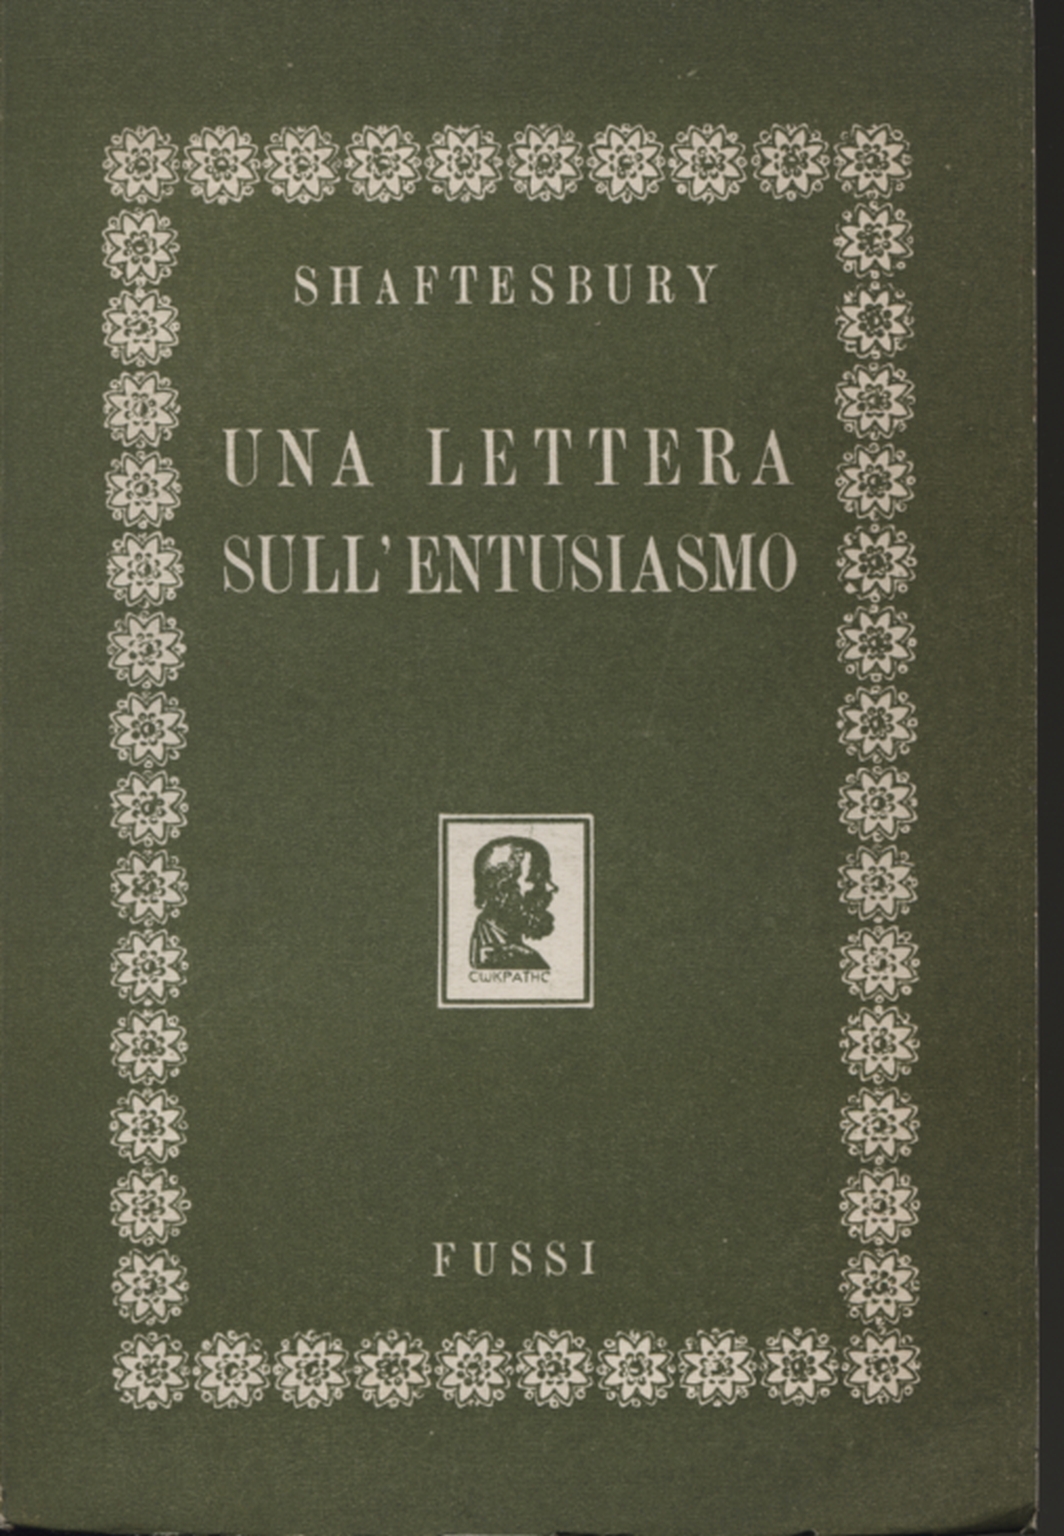 Una lettera sull'entusiasmo, Shaftesbury